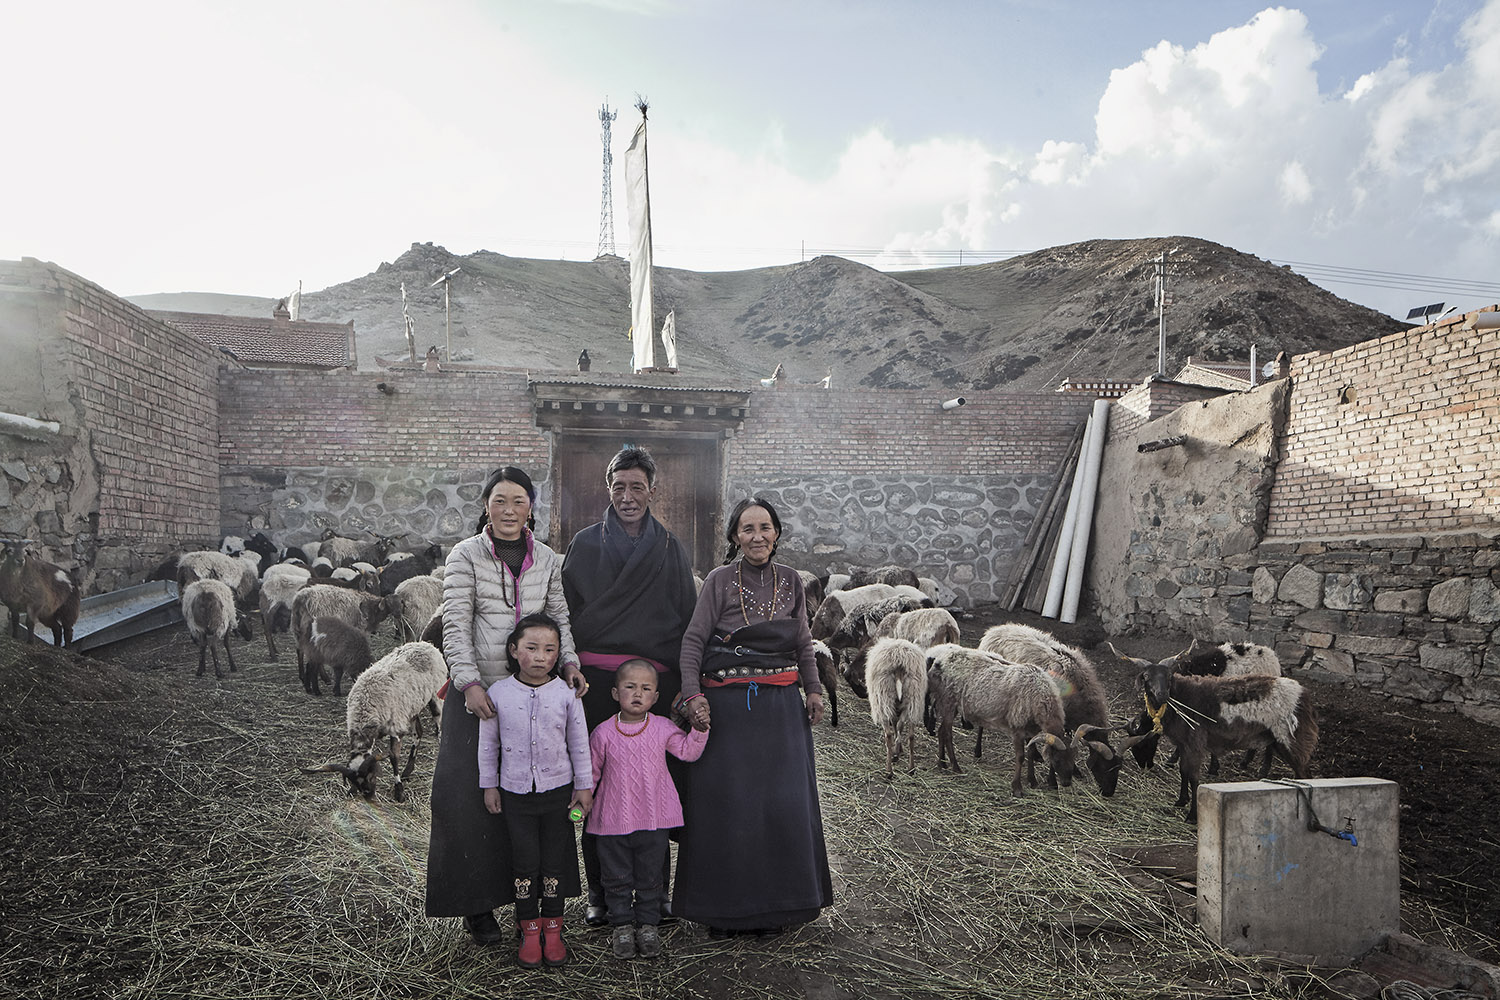  Norlha employee family portraits - for Norlha Textiles in Amdo on the Tibetan Plateau 